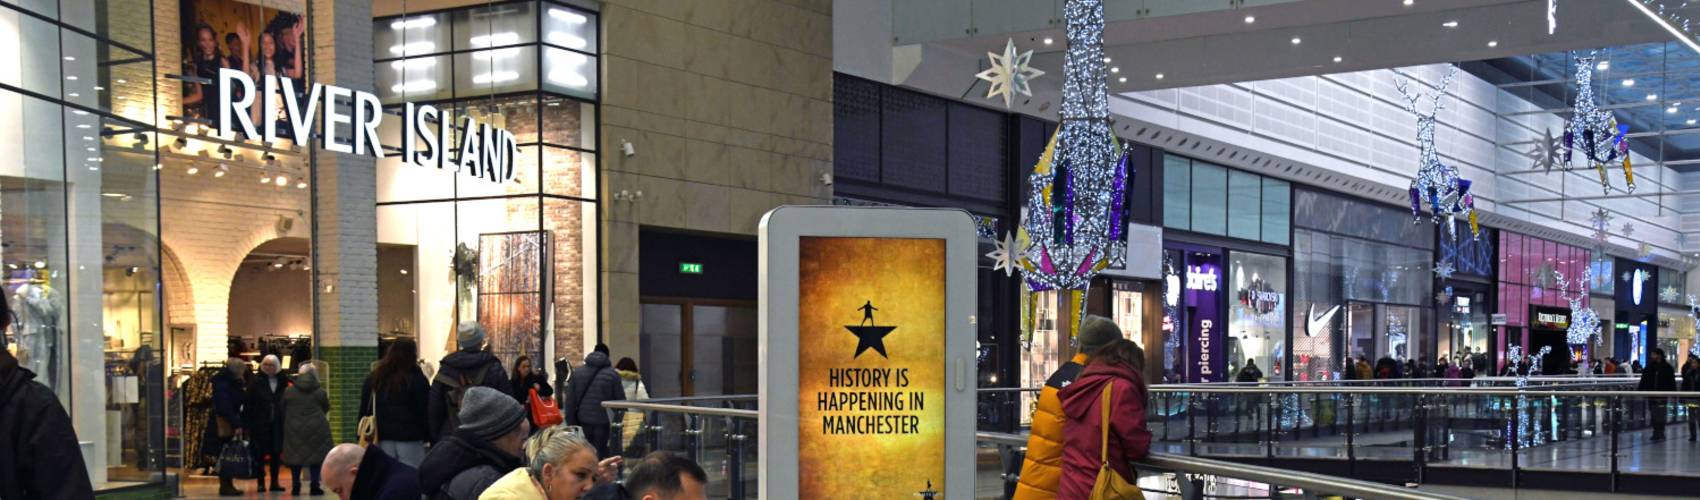 A digital screen inside a shopping mall displaying a Hamilton theatre advert